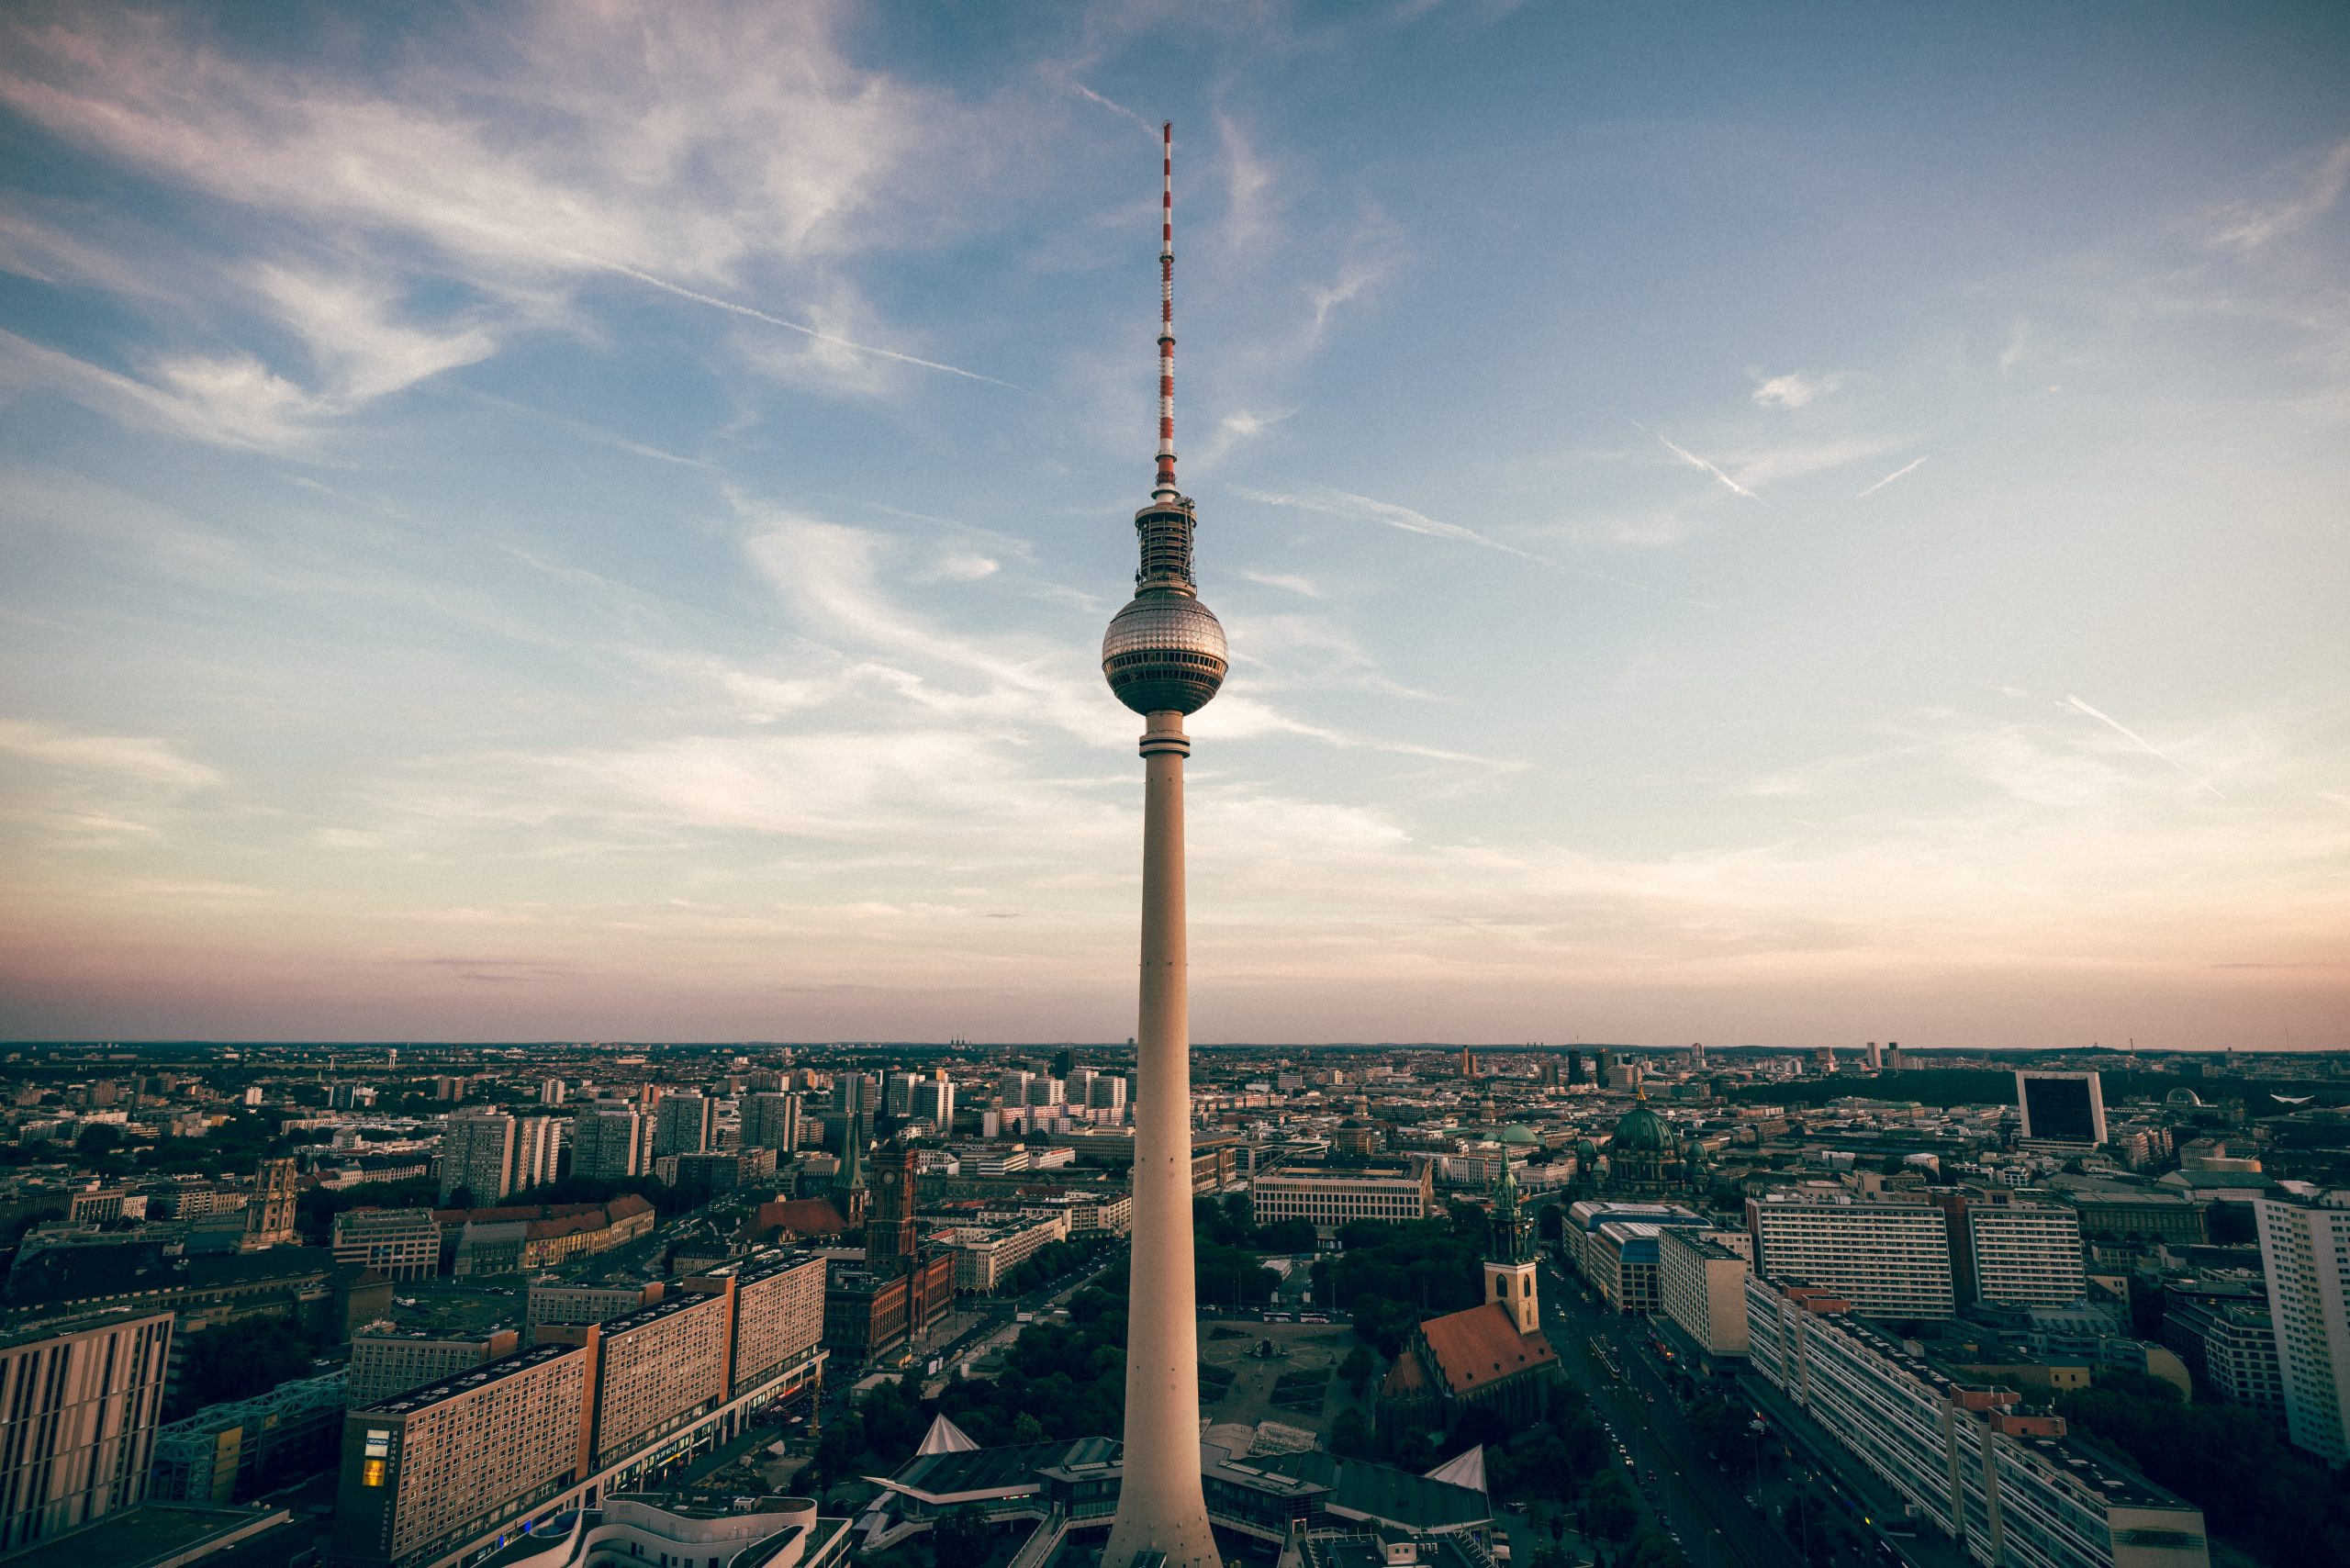 The skyline of Berlin, Germany